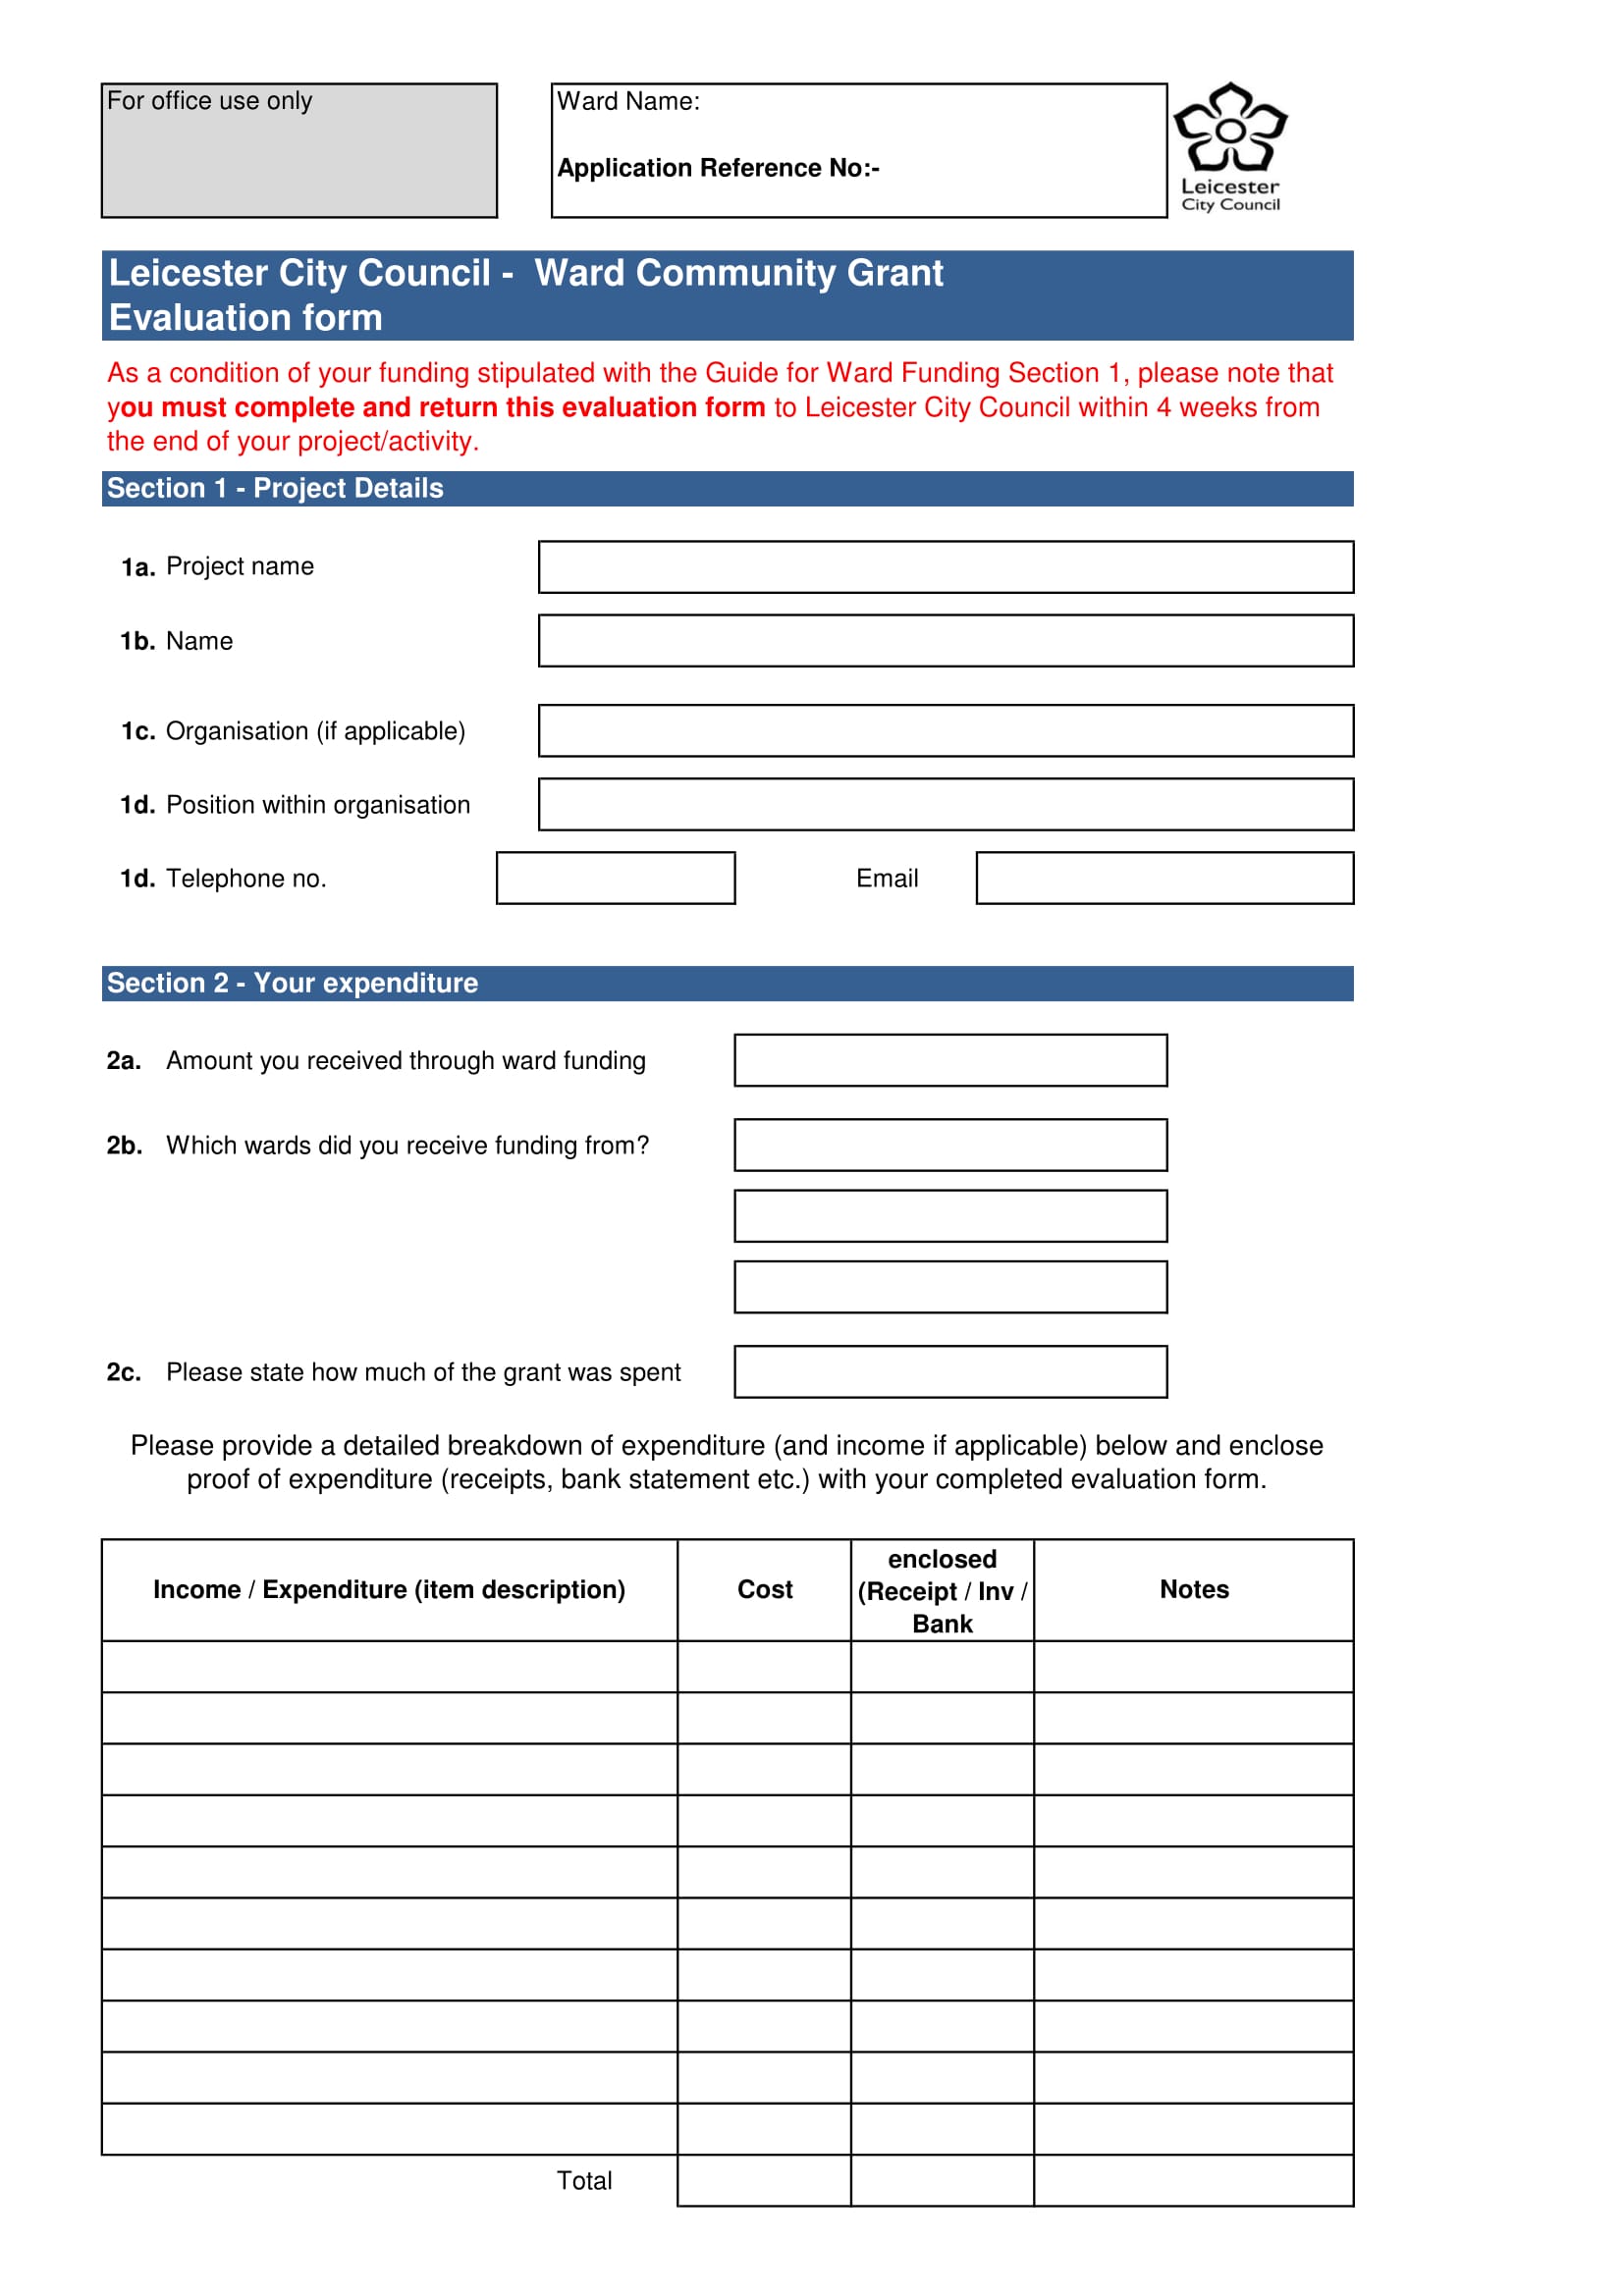 ward community grant evaluation form 1